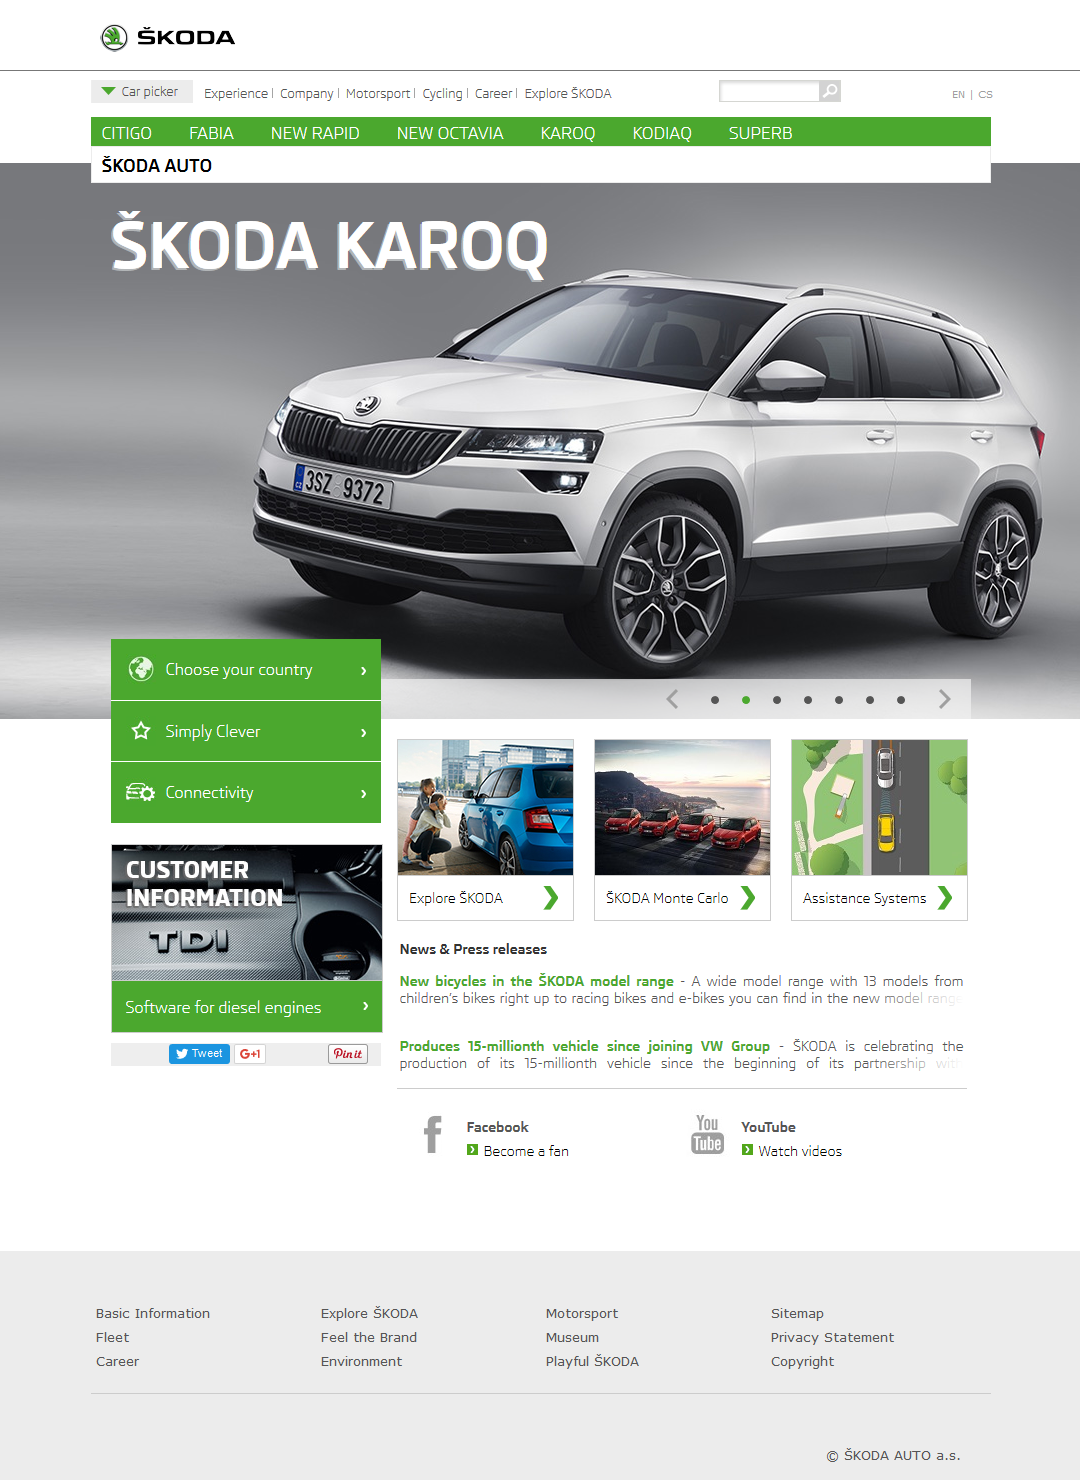 Škoda Auto website in 2017